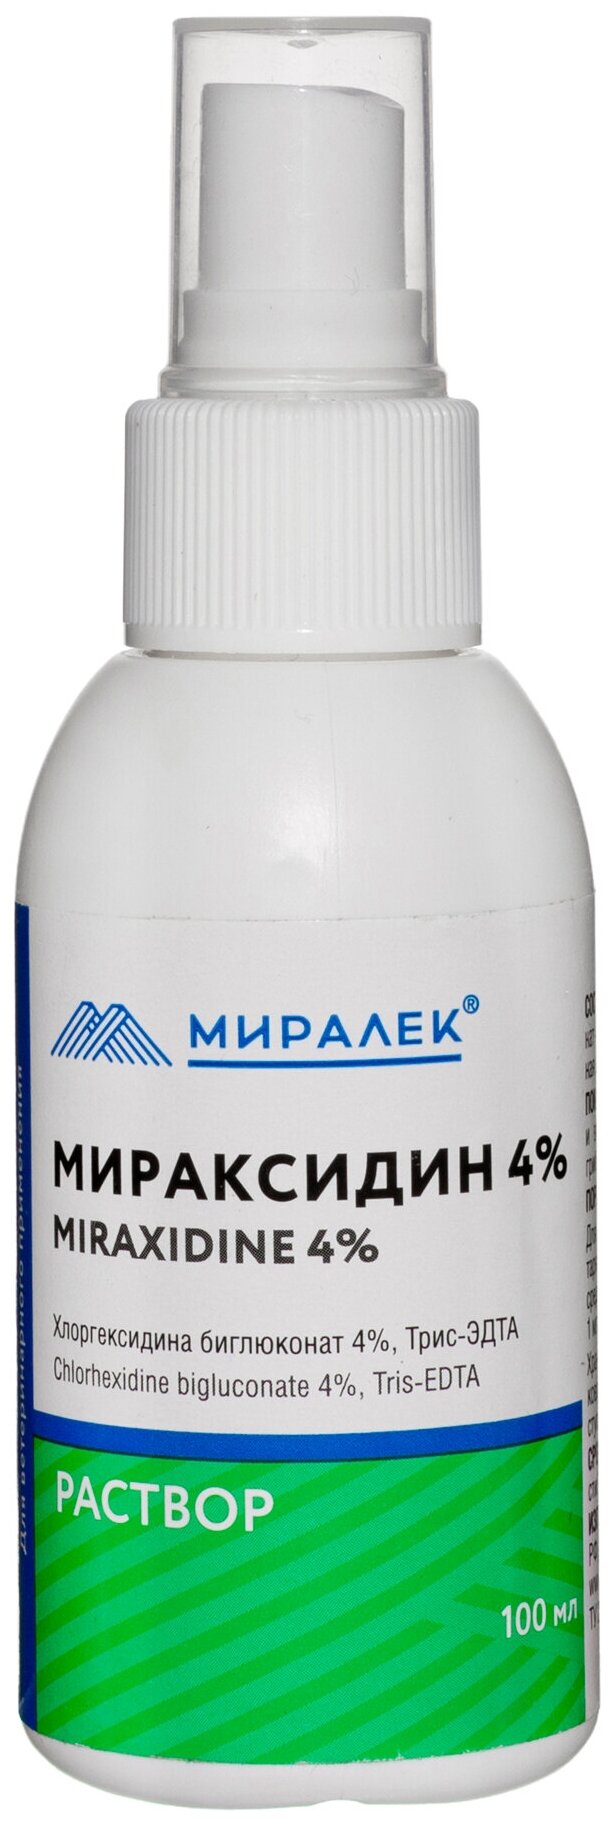 Мираксидин 4% миралек, 100мл